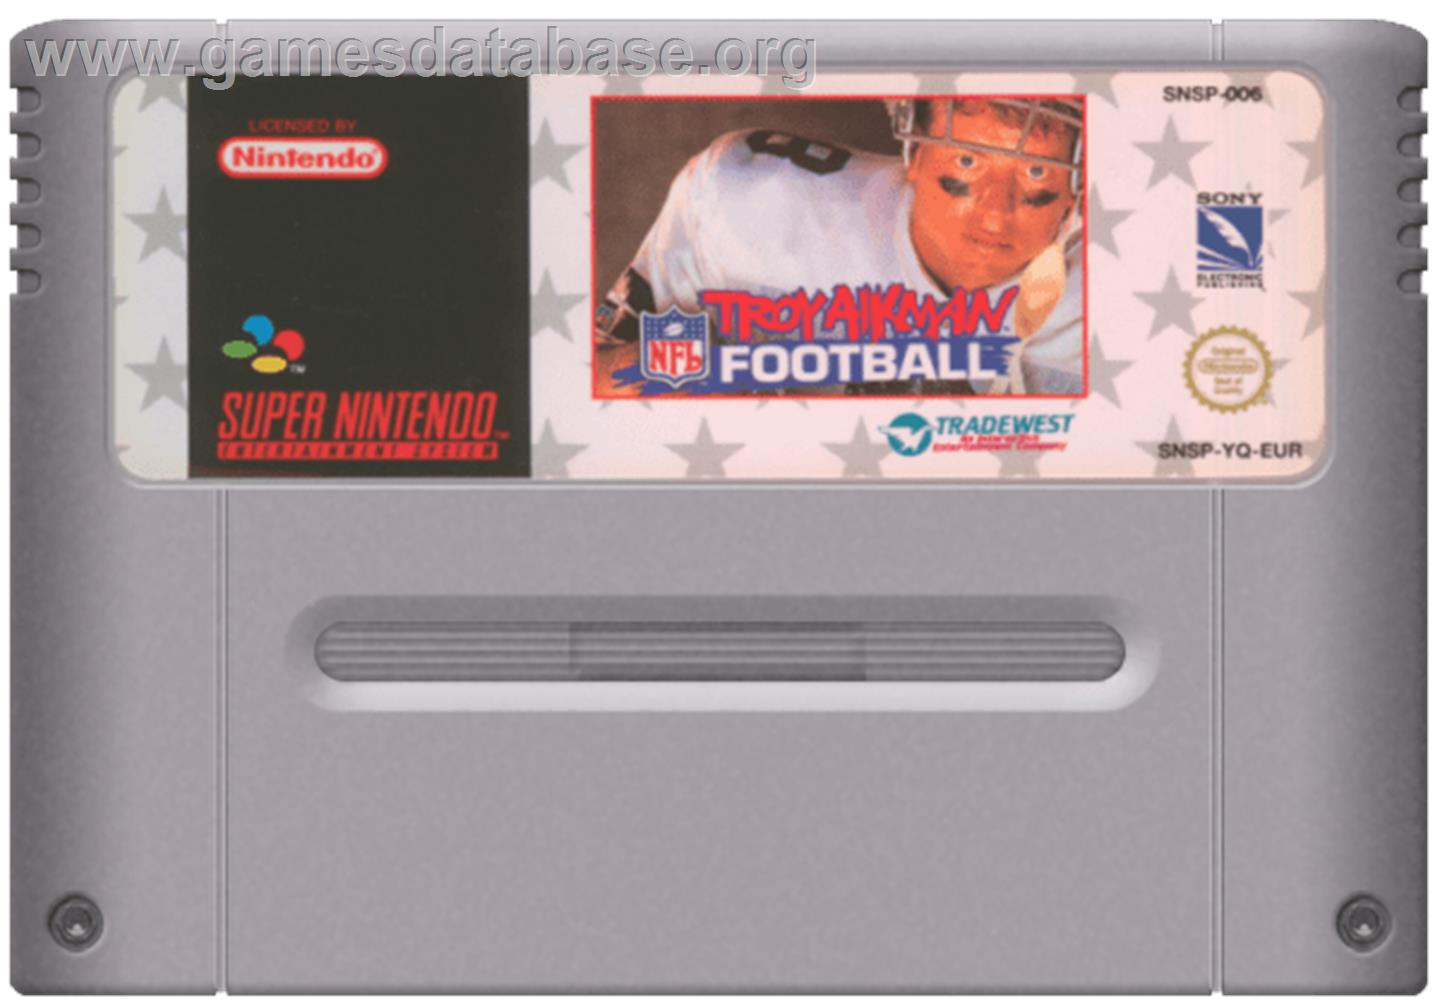 Troy Aikman NFL Football - Nintendo SNES - Artwork - Cartridge